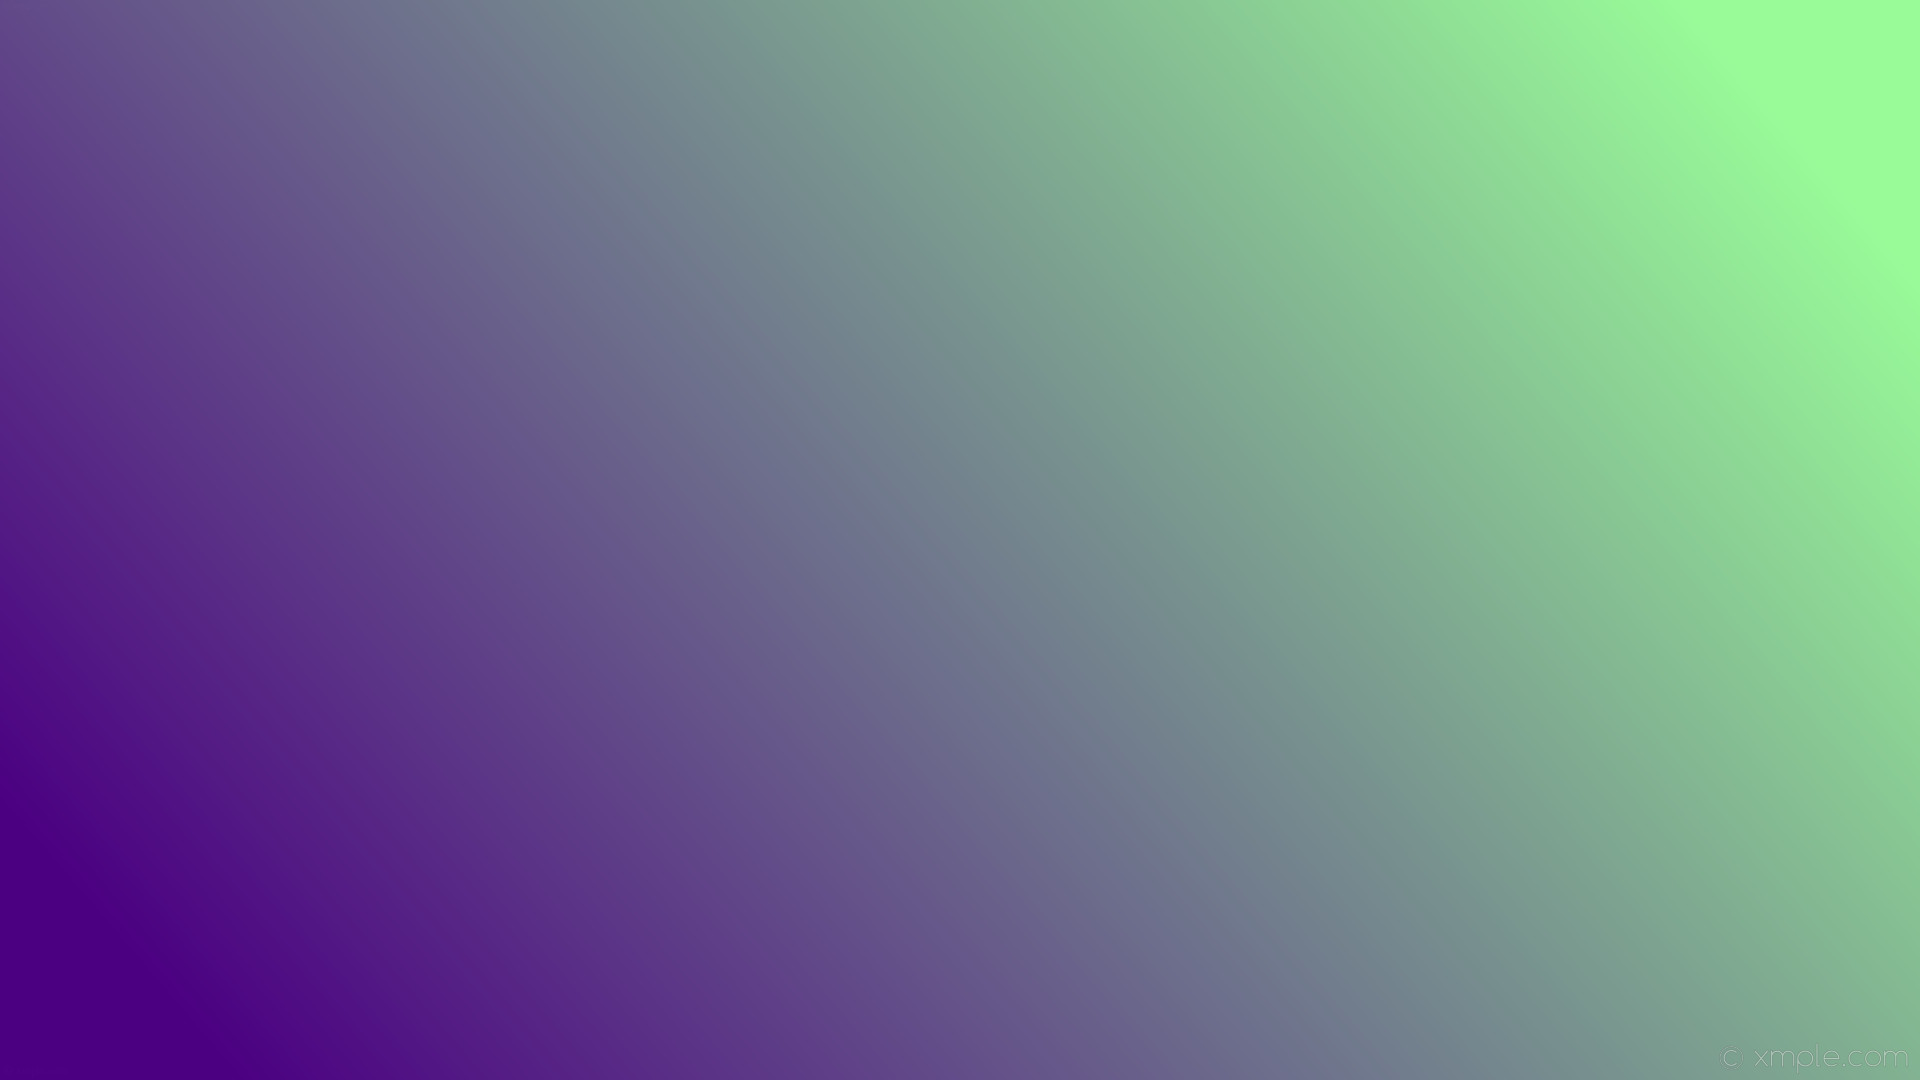 Wallpaper linear gradient green purple pale green indigo fb98 b0082 15